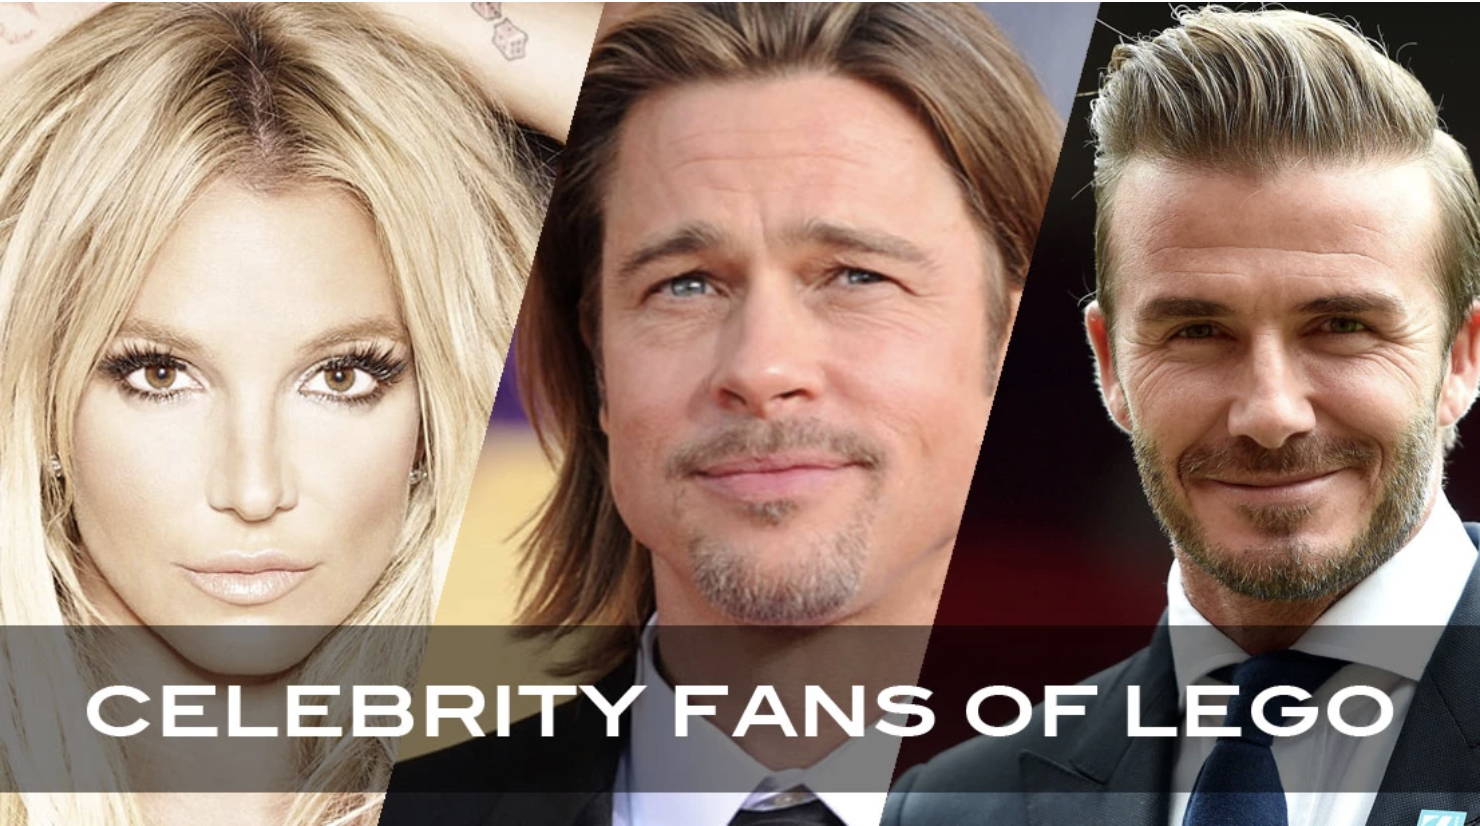 Celebrity fans the world